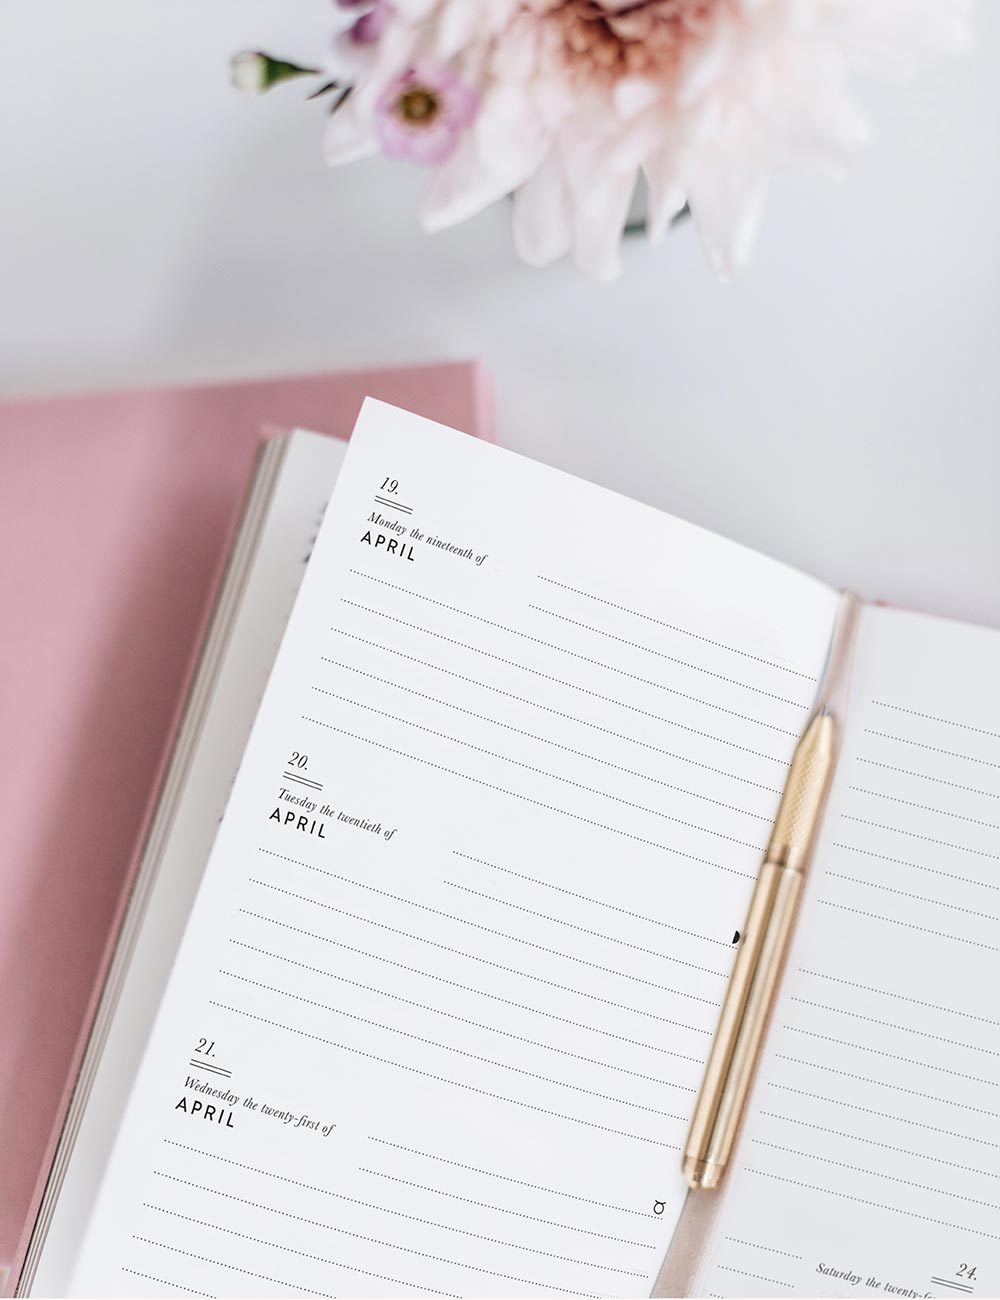 Bespoke Letterpress - 2021 Petite Linen Bound Planner - Blush Pink